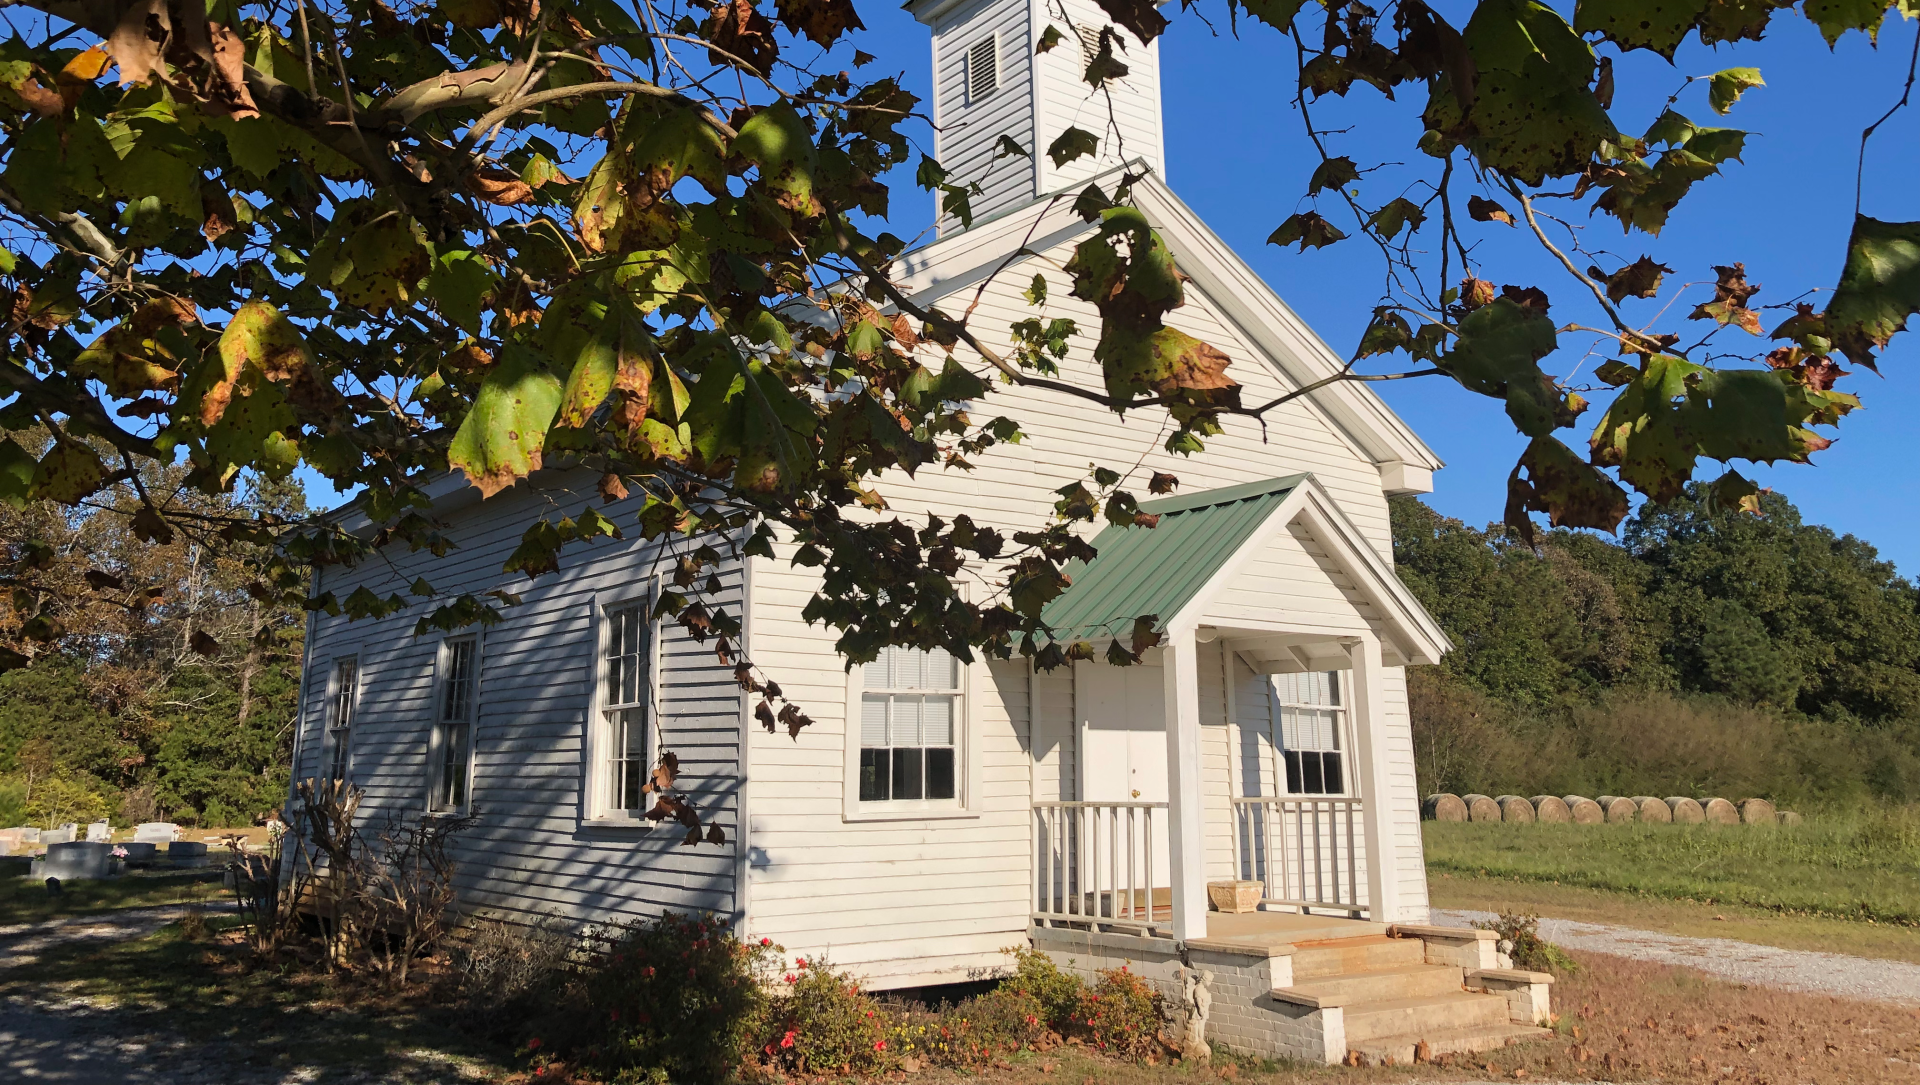 Pine Flat Church in Marbury, Alabama